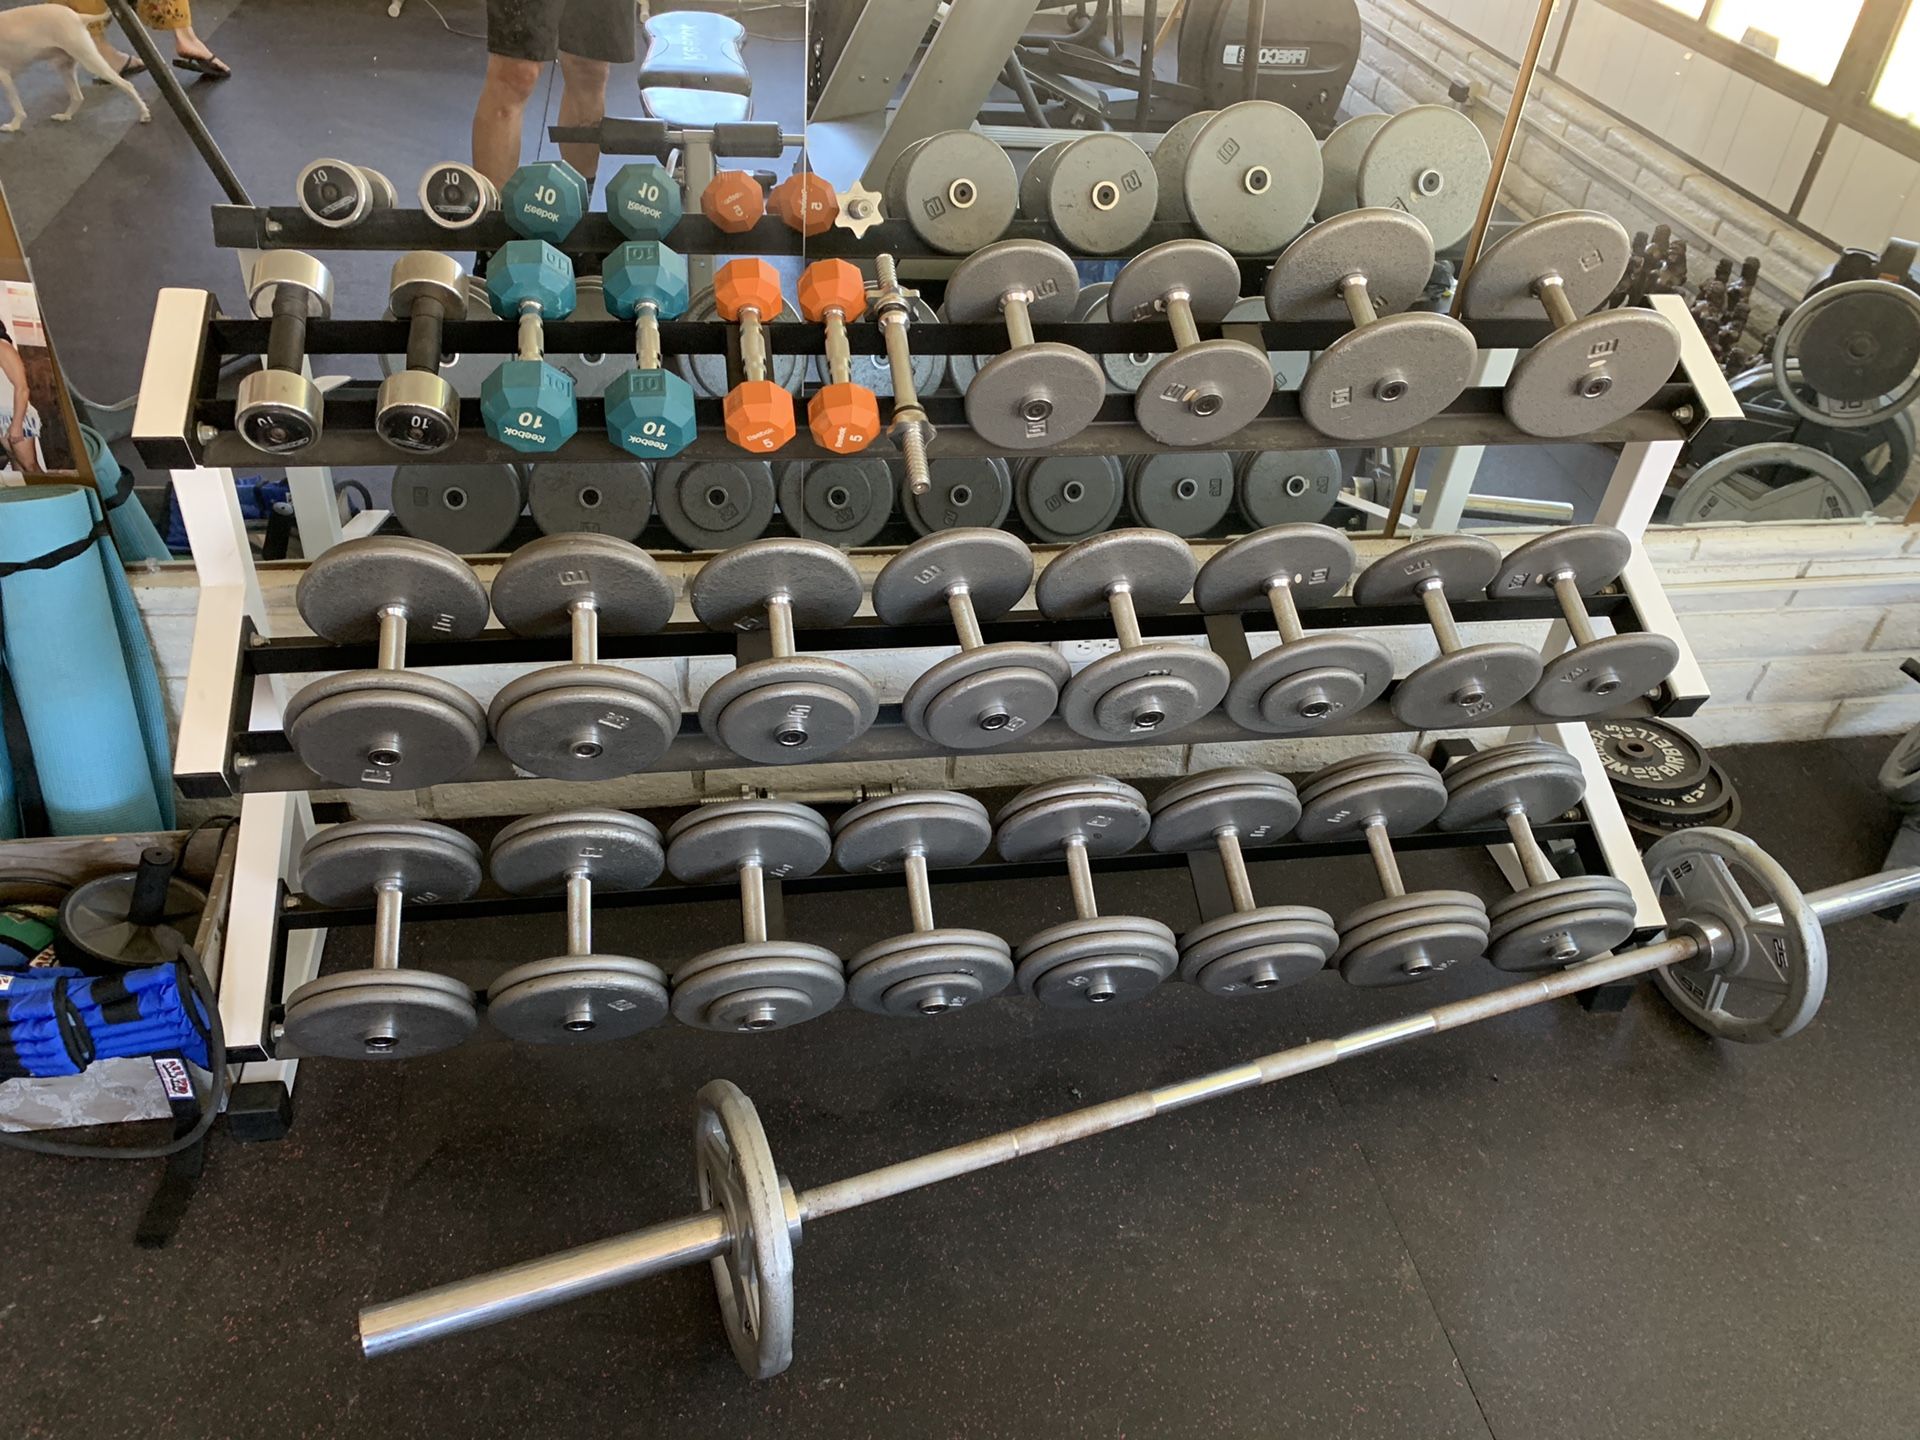 Weight set / bar and bench